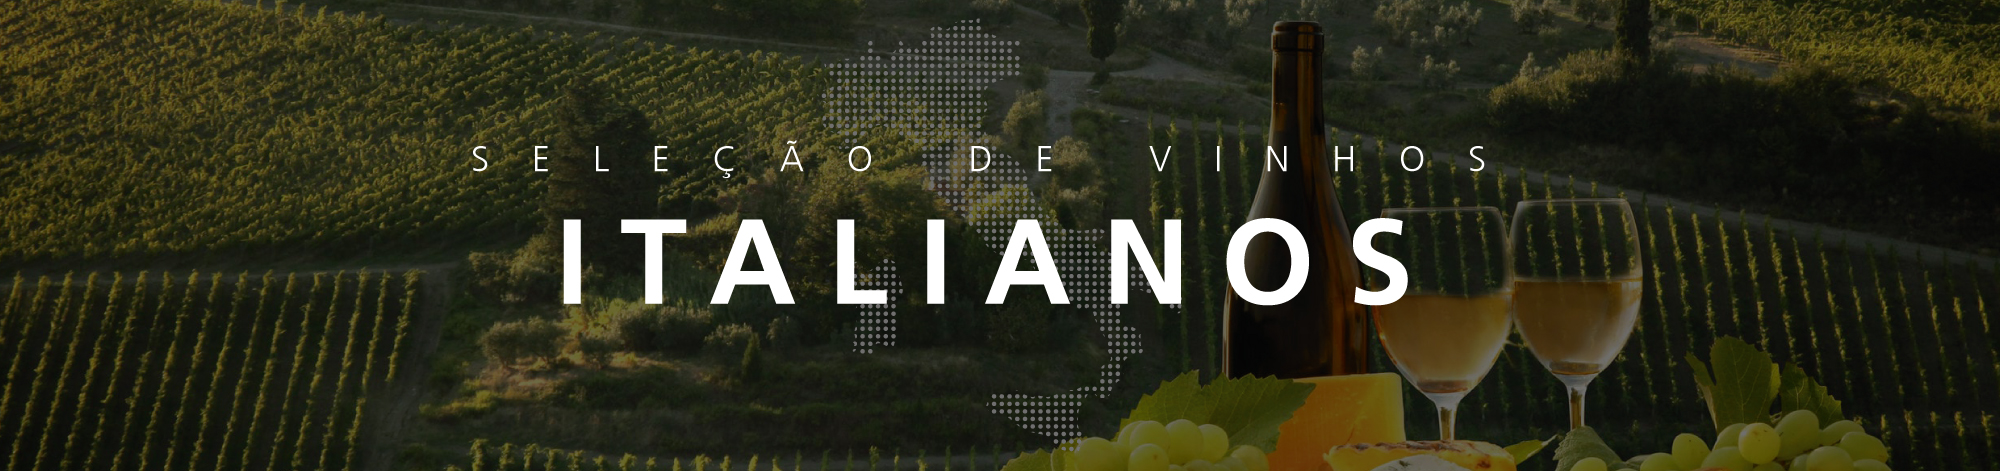 vinhos italianos